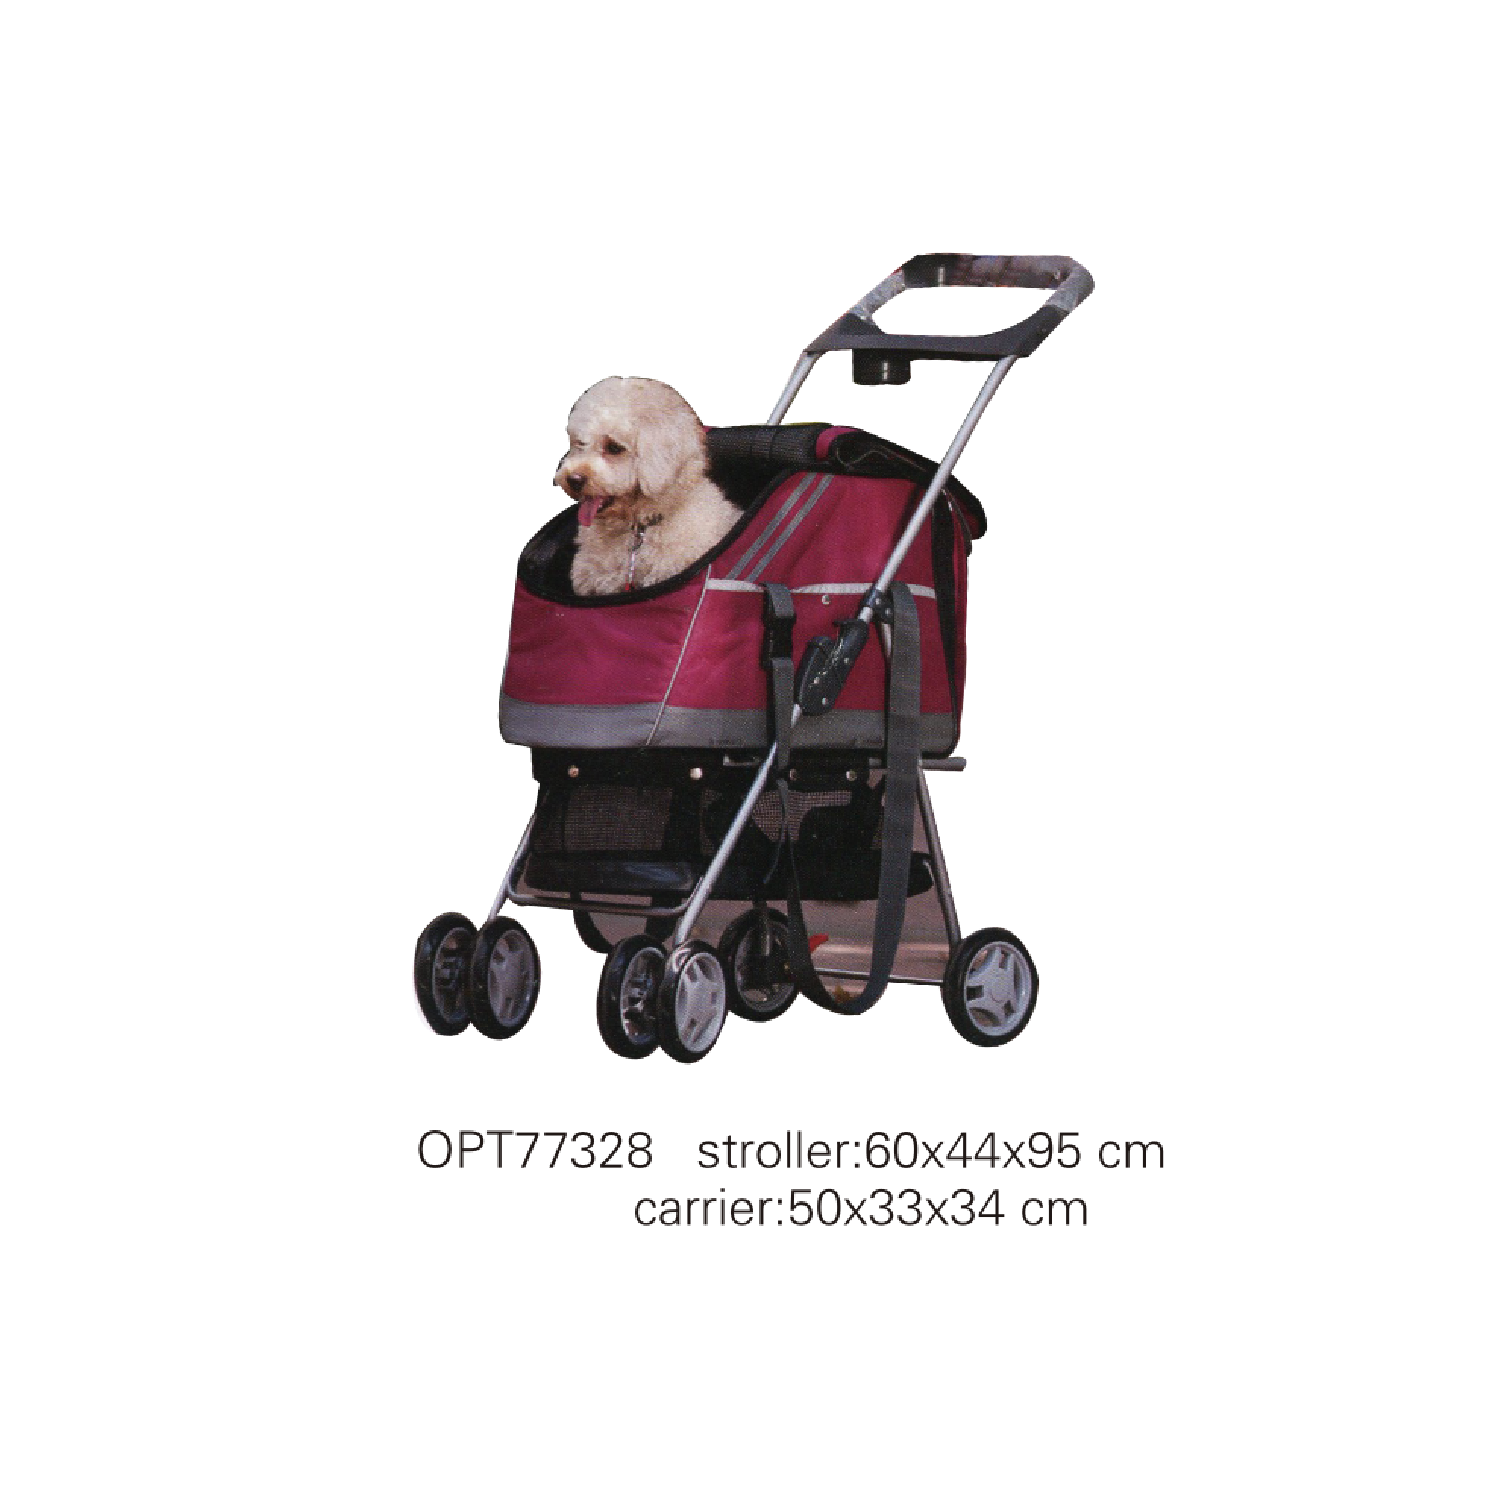 OPT77328 Pet strollers